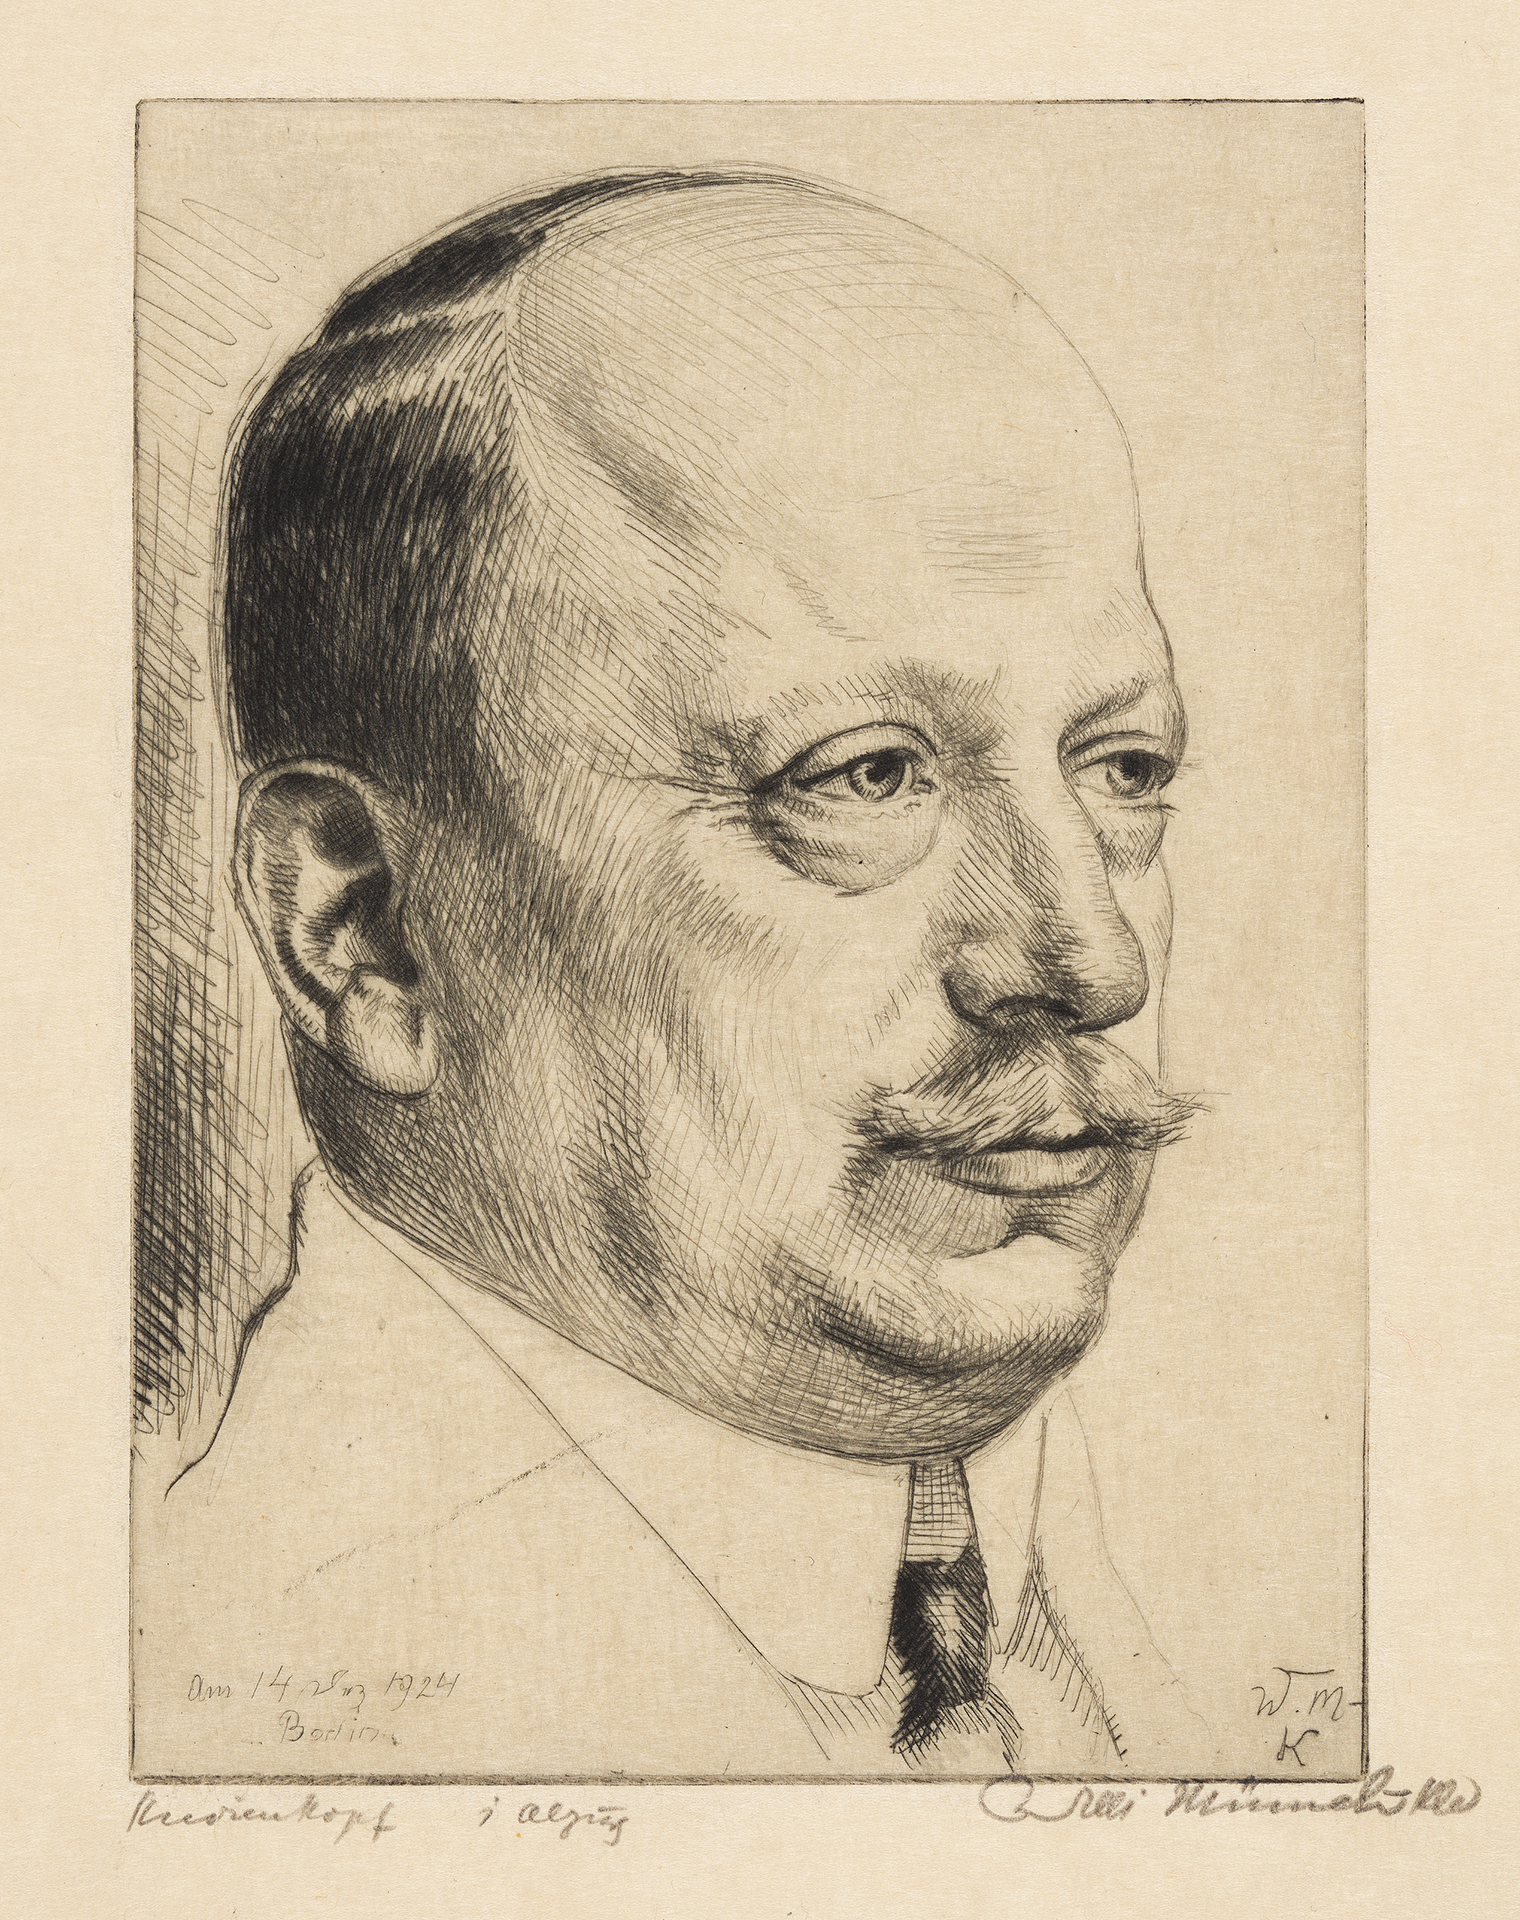 Etching by the artist Willi Münch-Khe, showing a portrait of Julius Freund.